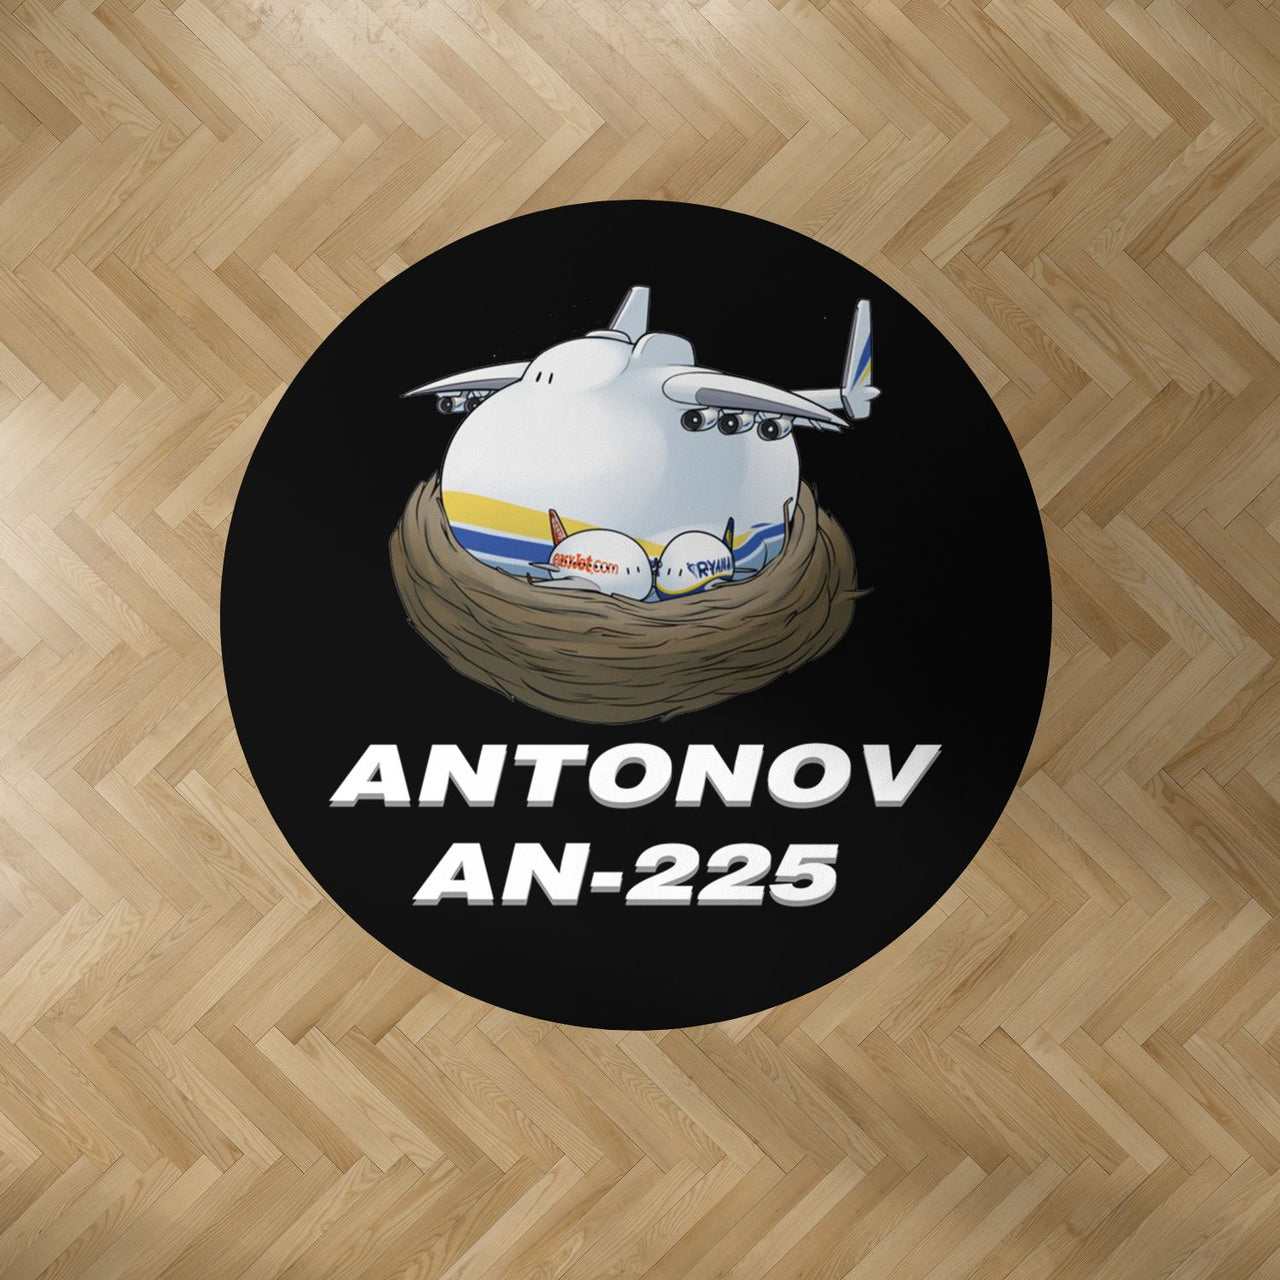 Antonov AN-225 (22) Designed Carpet & Floor Mats (Round)